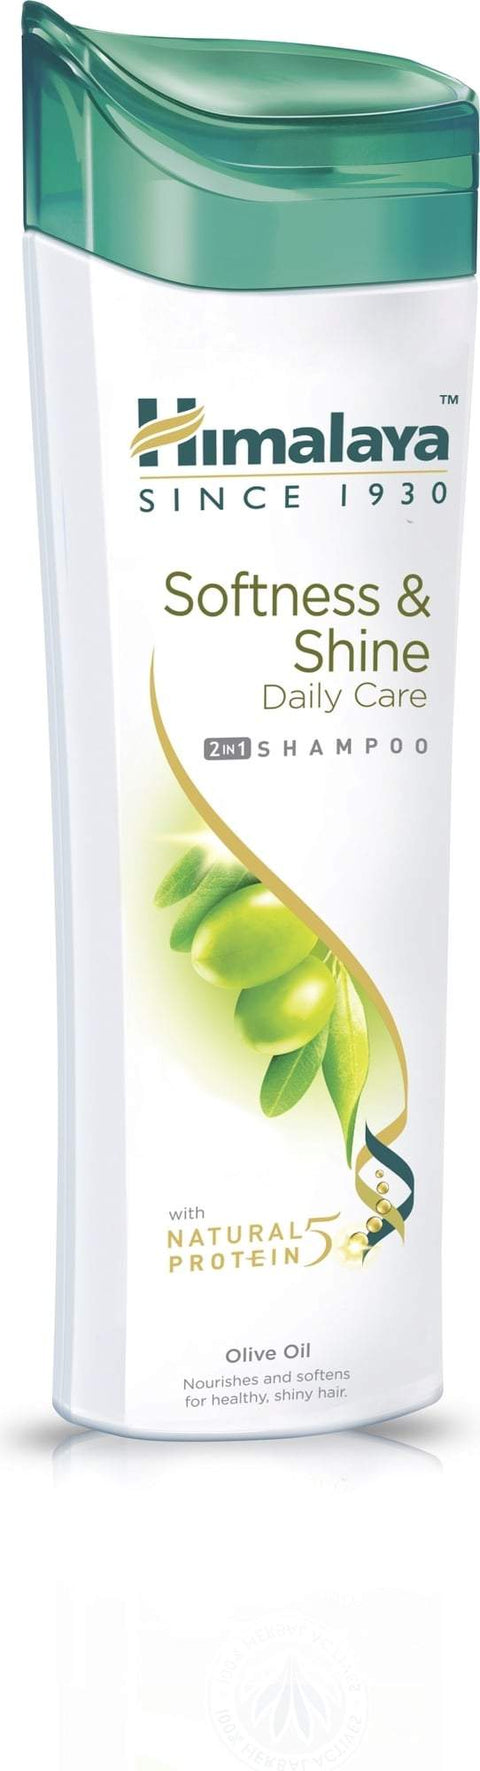 Softness & Shine Daily Care Shampoo 2 in 1 200ml